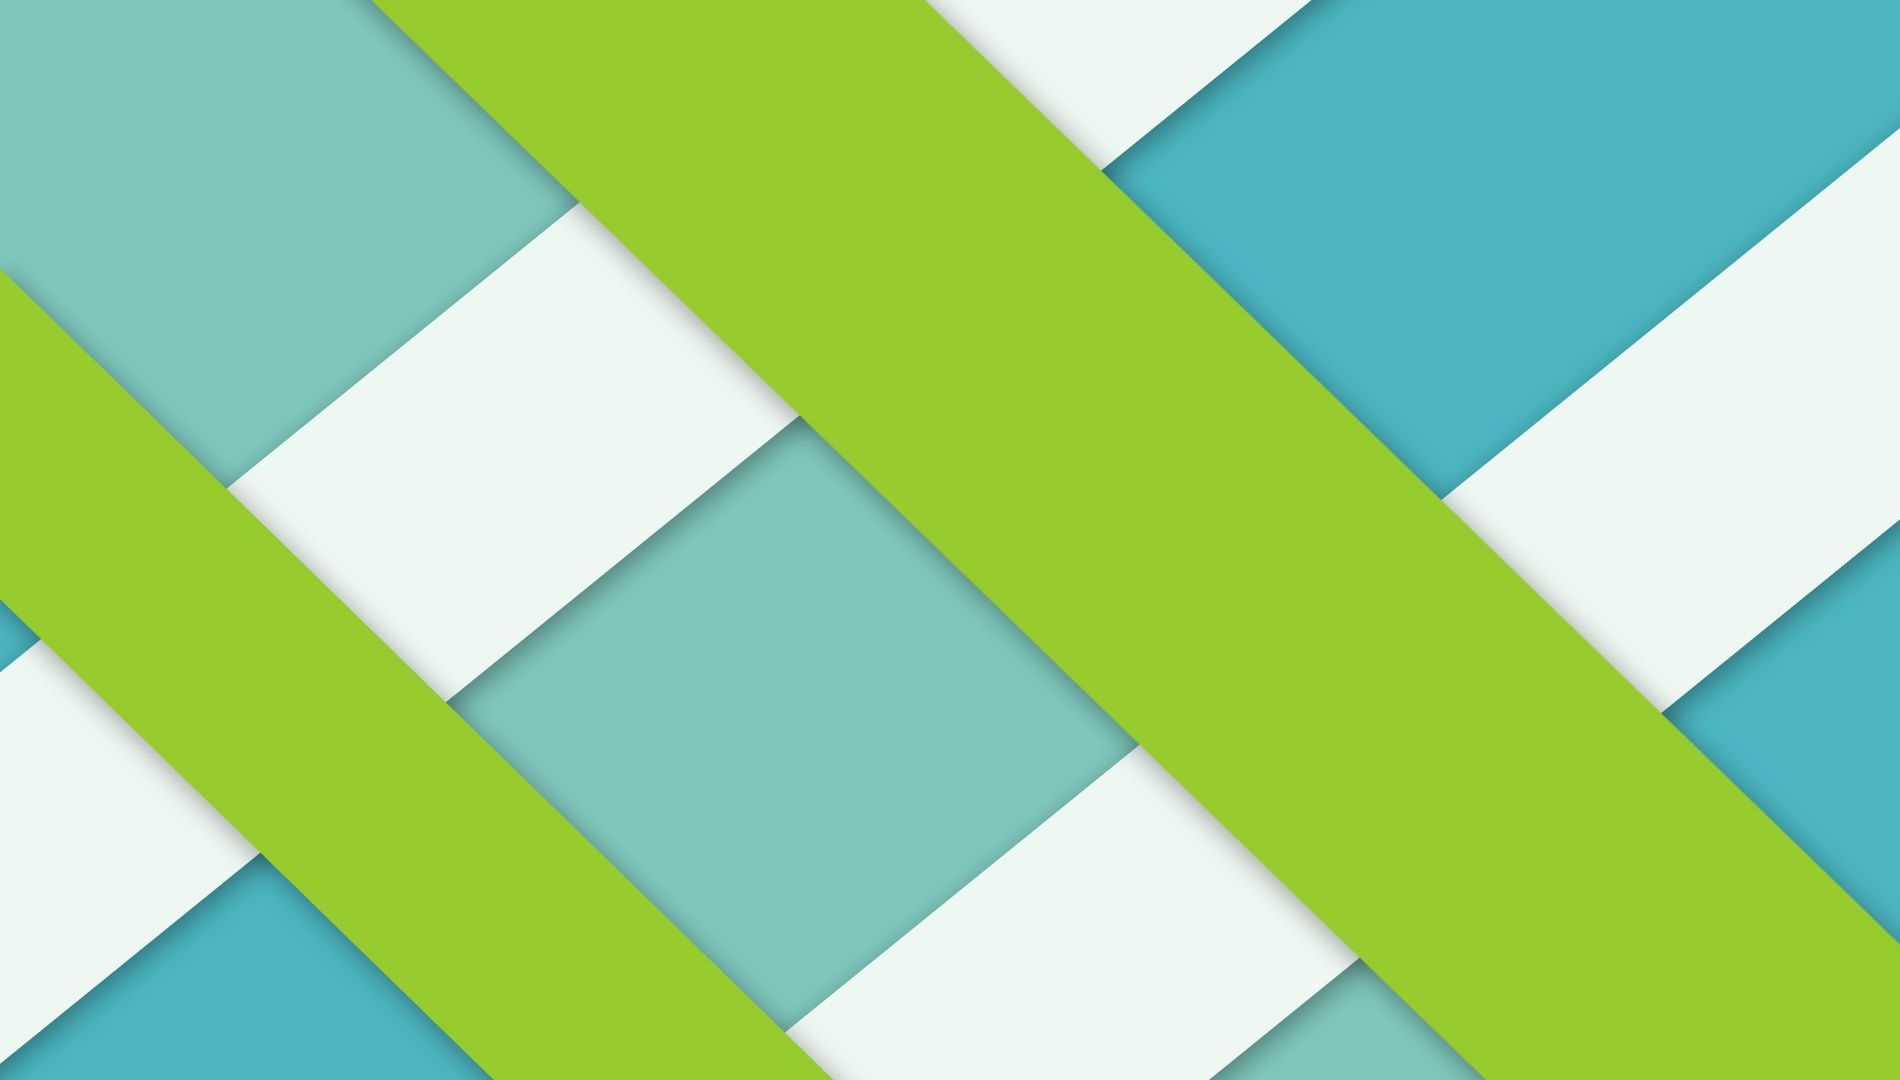 Wallpaper Material design, stripes crossing, green white